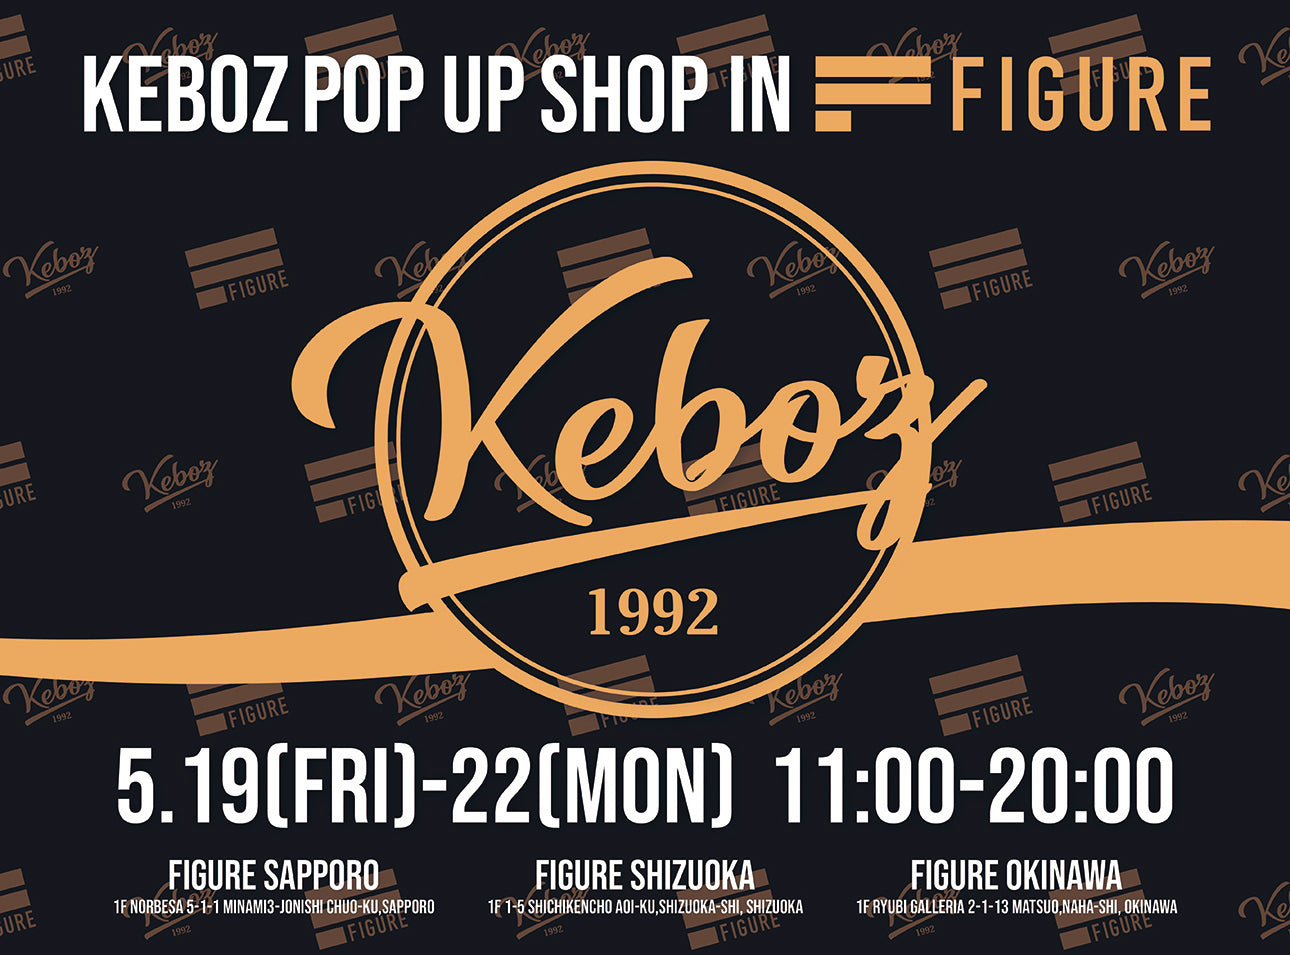 KEBOZ POP UP SHOP IN FIGURE  Date:5/19(FRI) - 5/22 (MON)